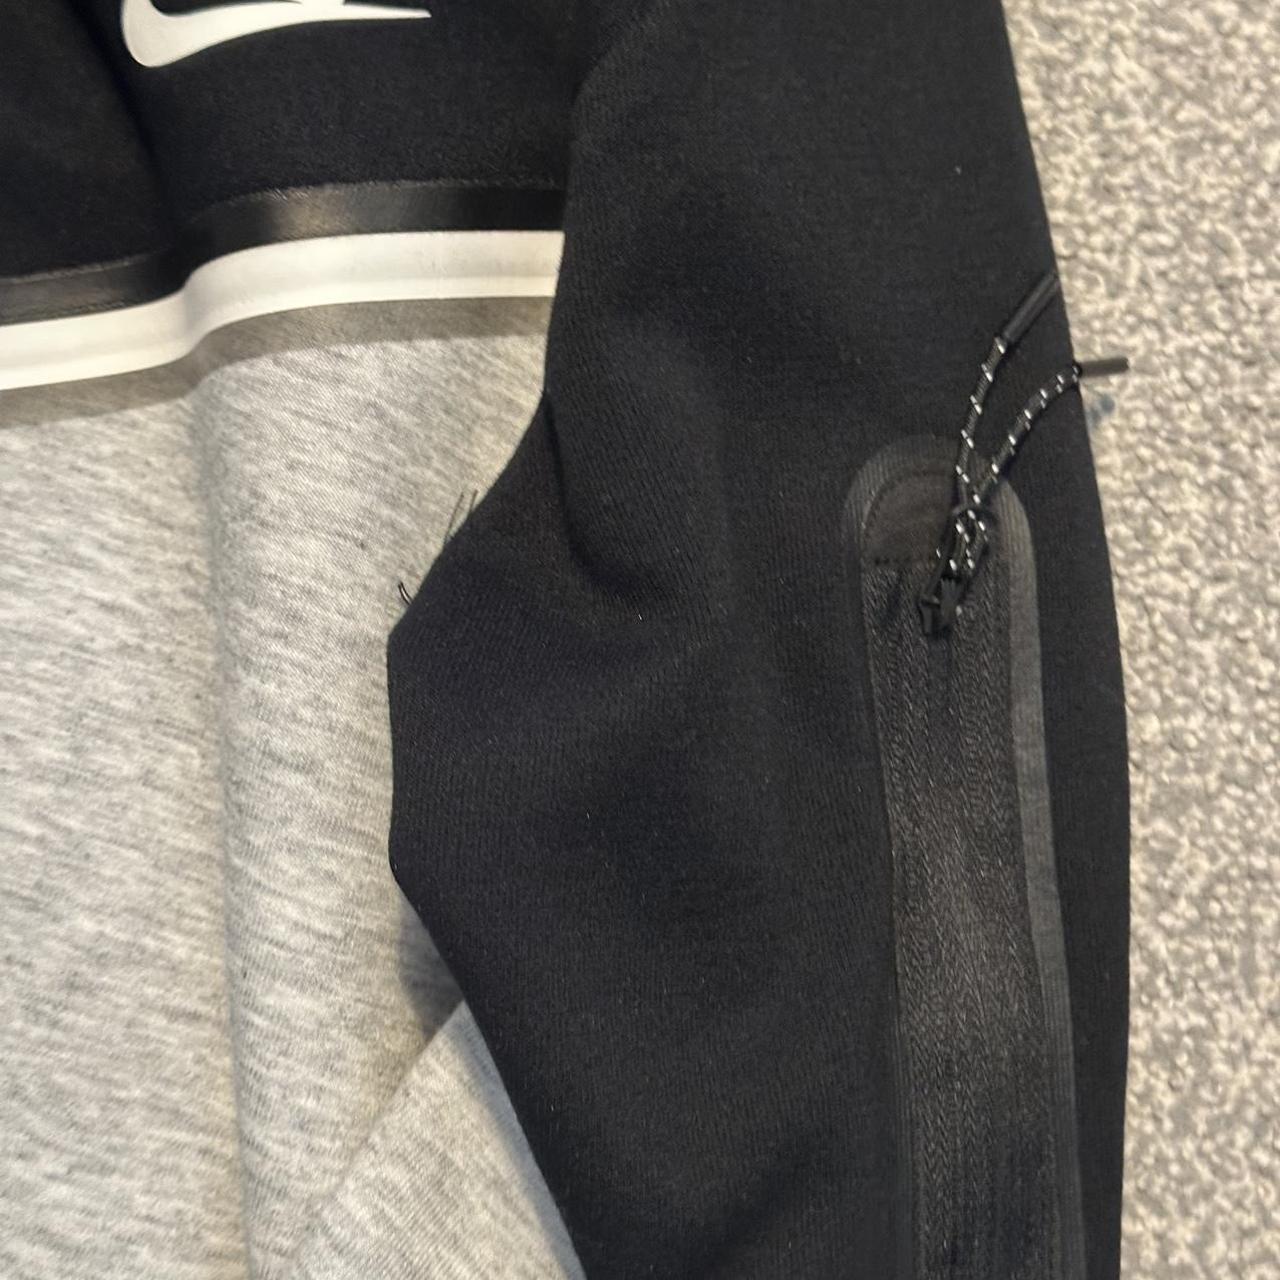 Nike Tech Fleece Black and grey, with white... - Depop